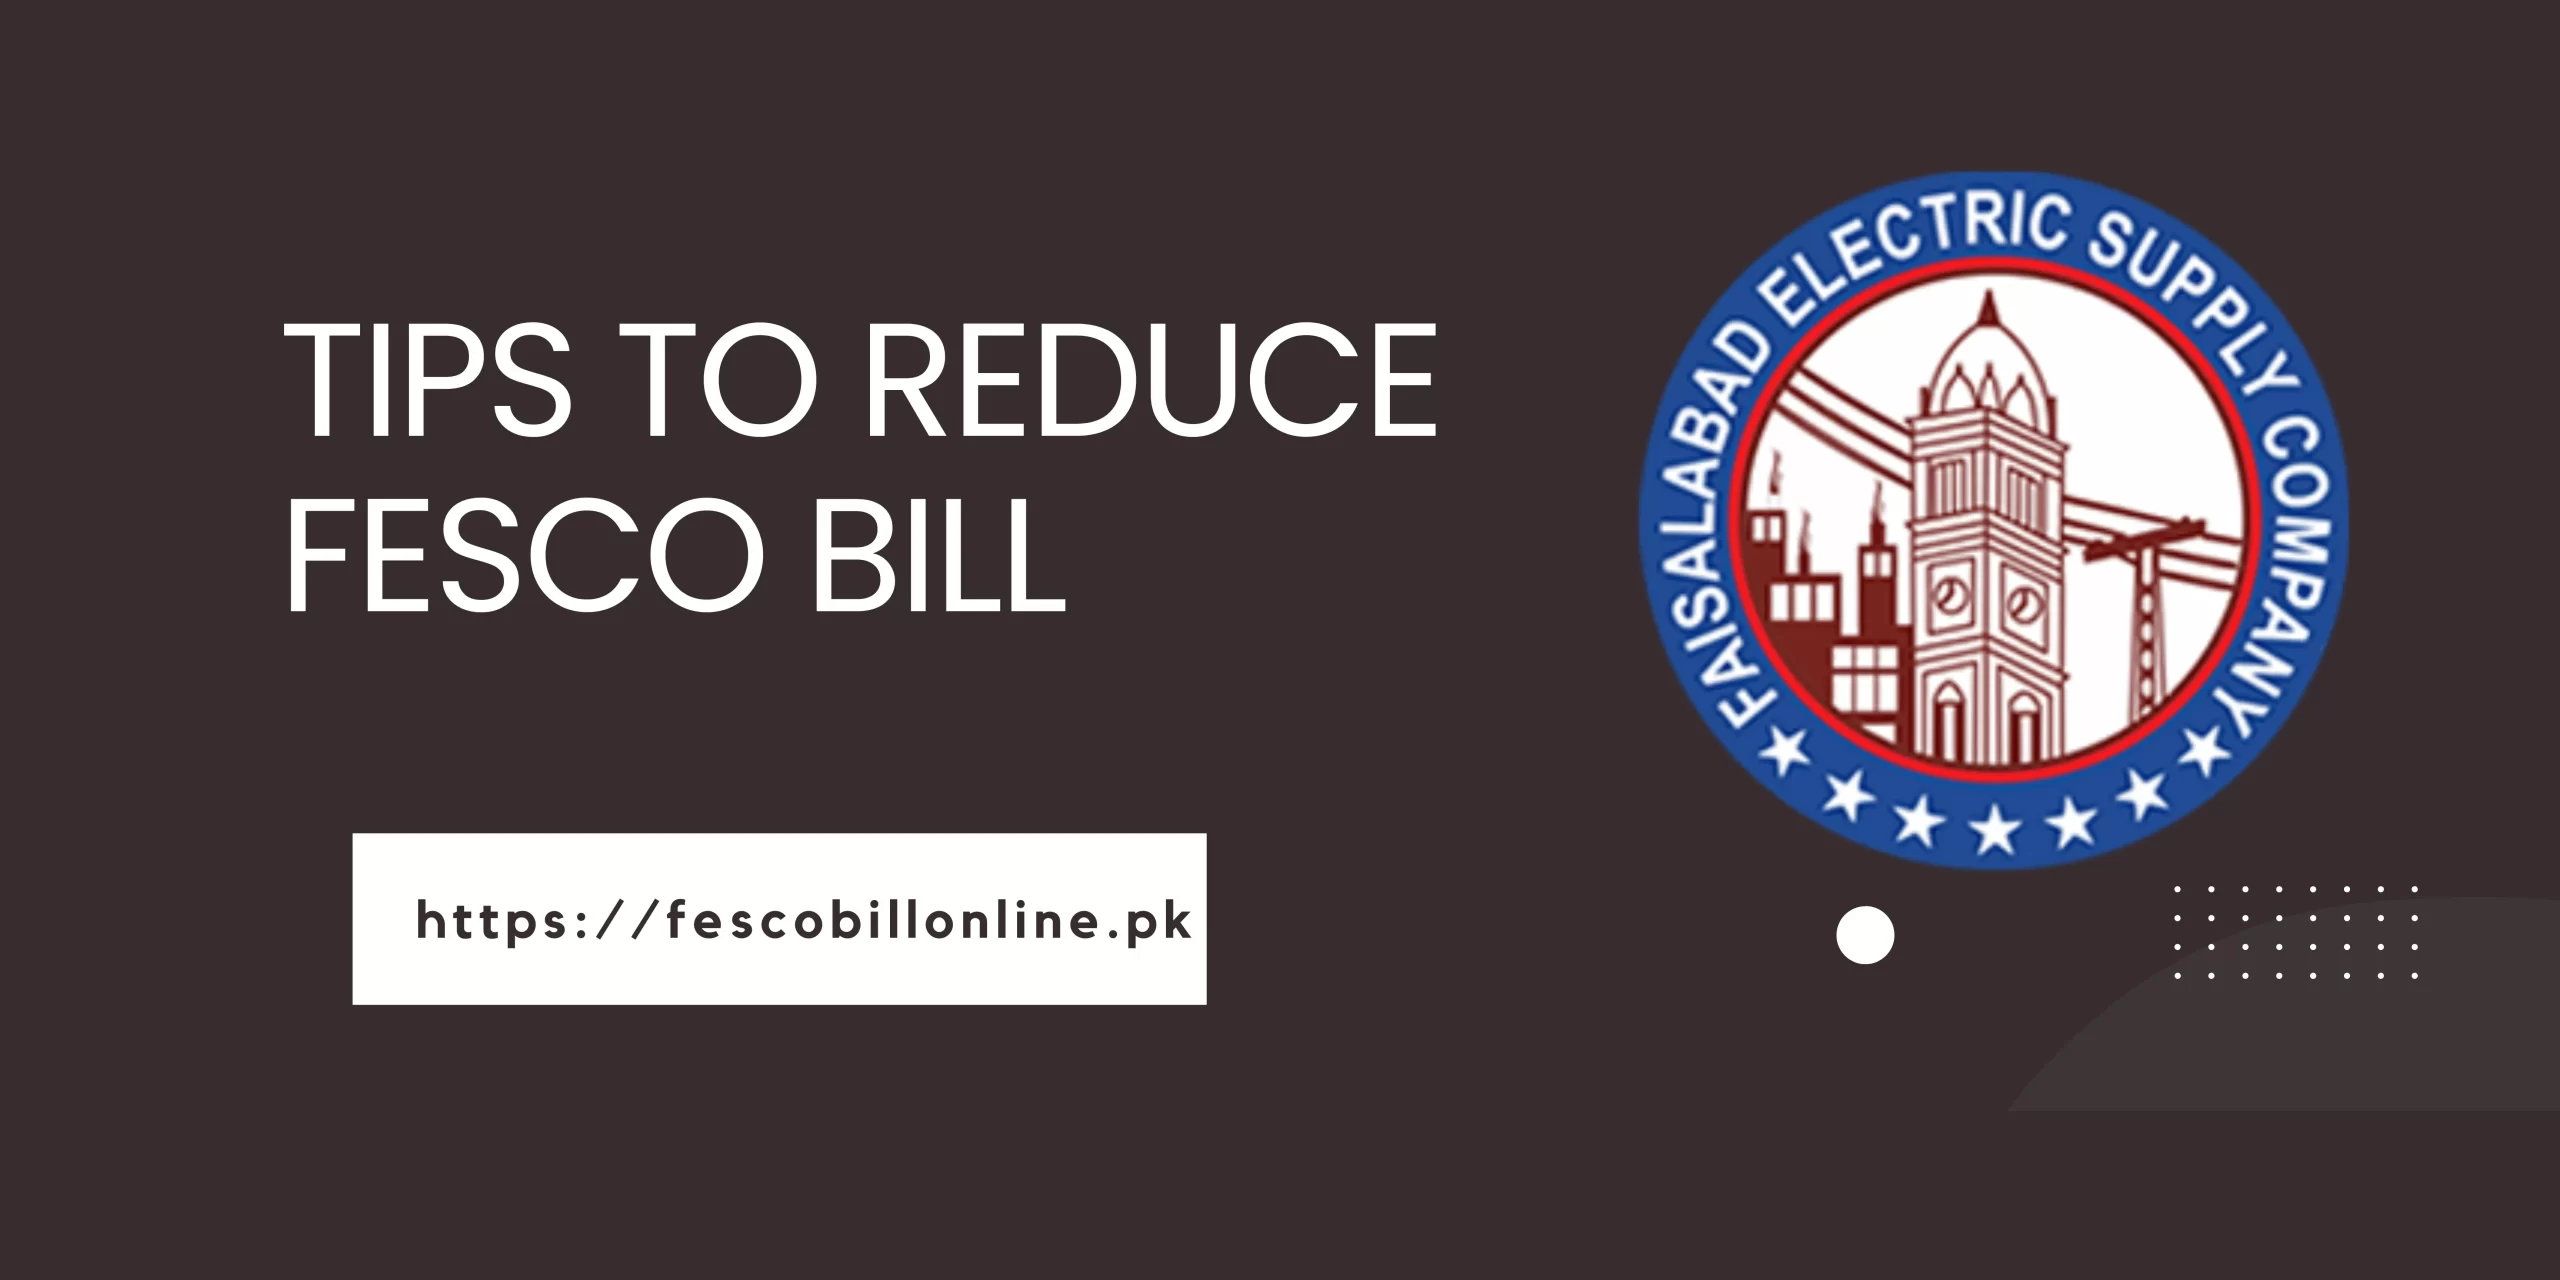 FESCO electricity bill